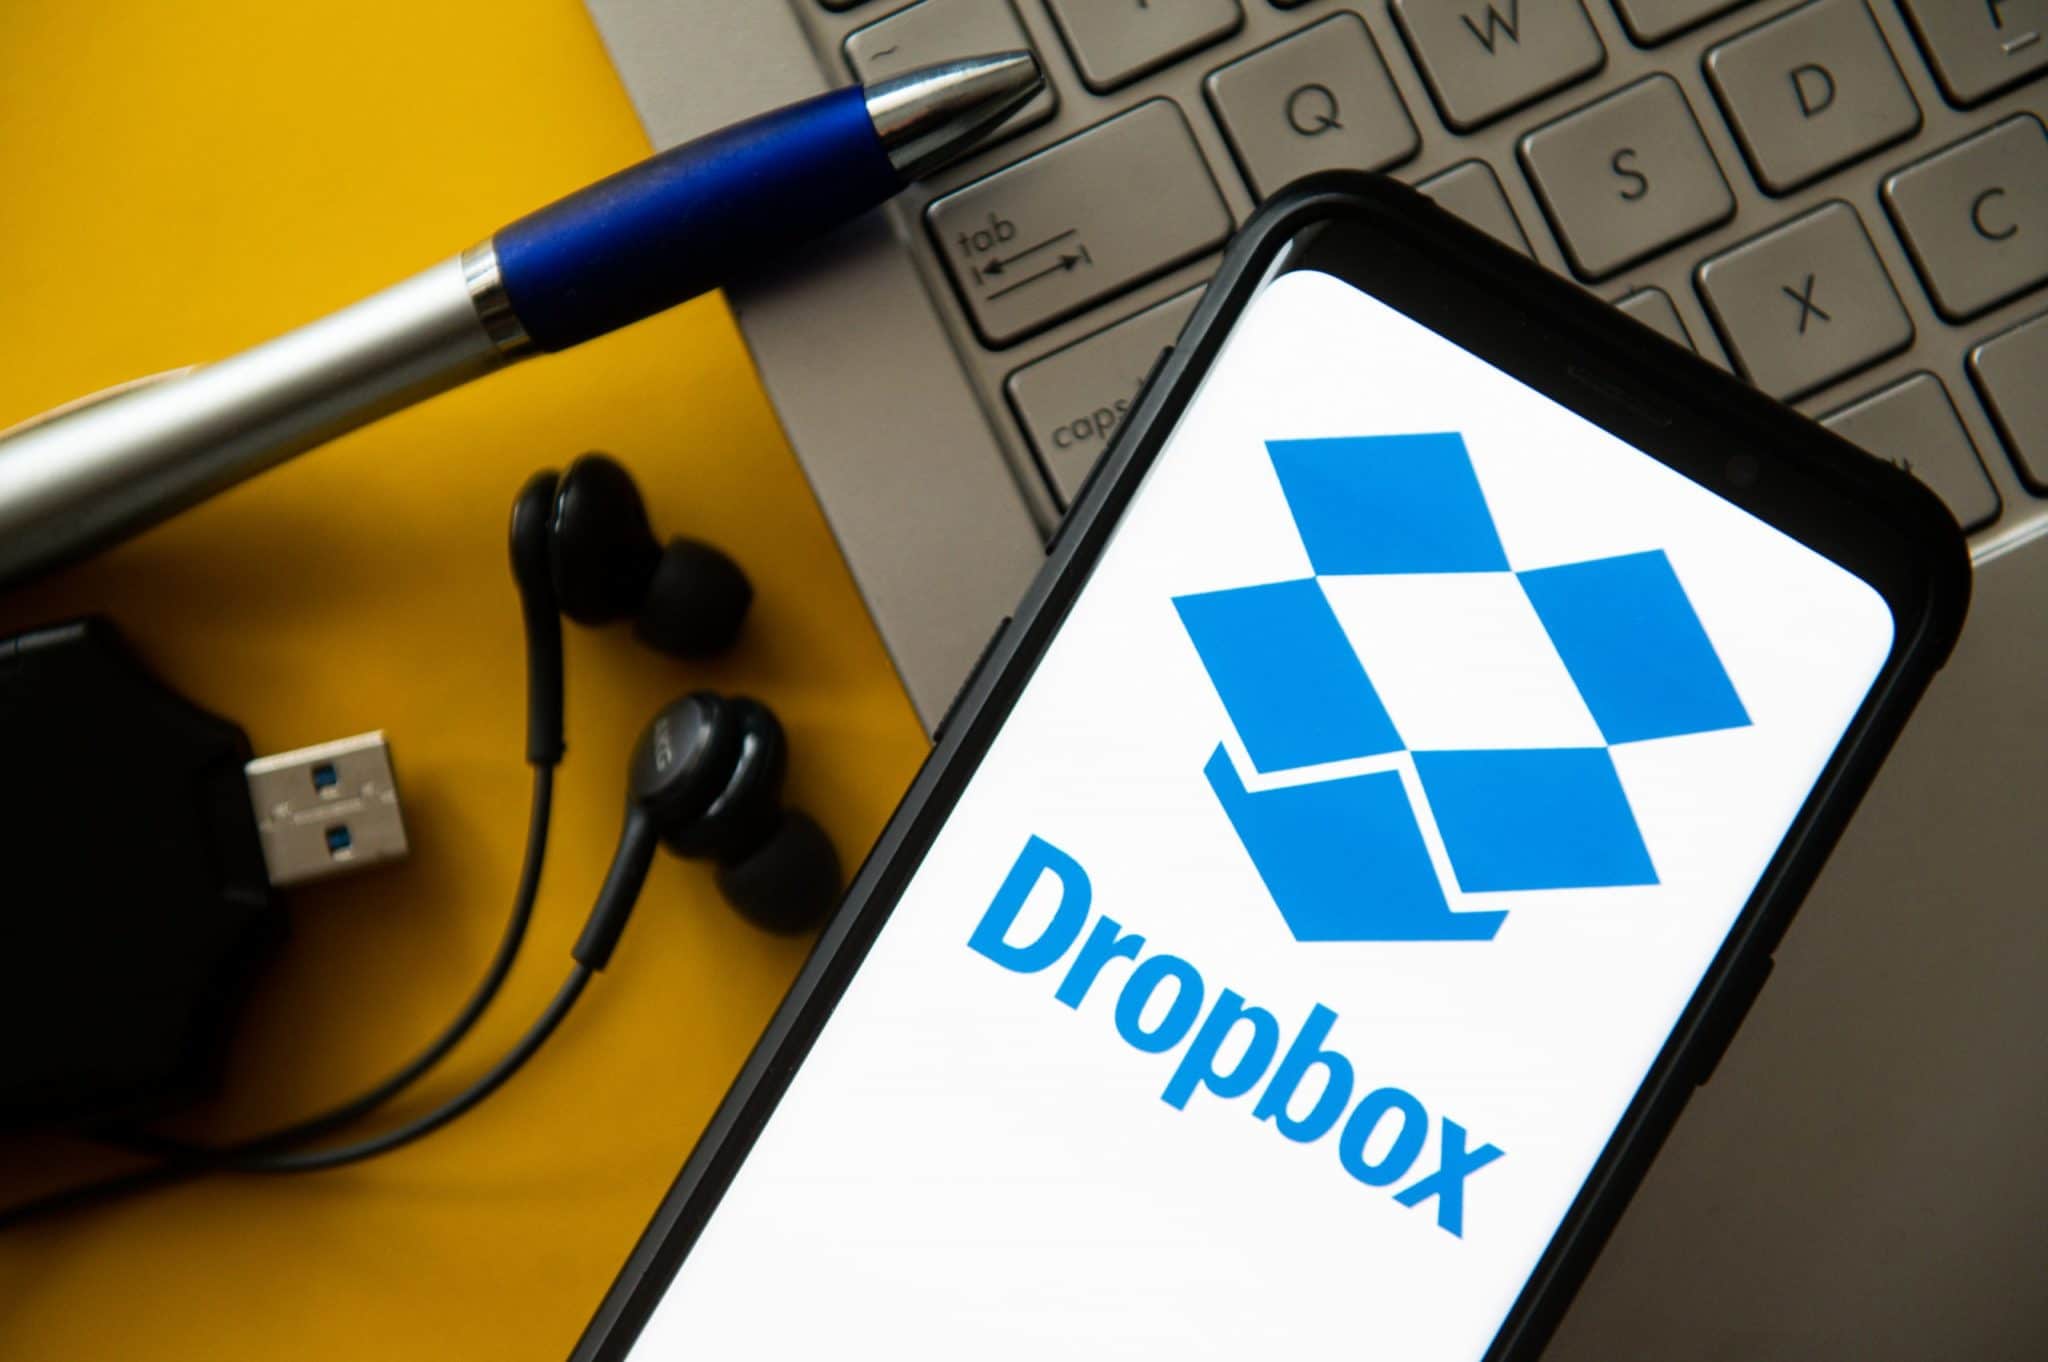 Dropbox تسمح للمستخدمين بتخزين 50 كلمة مرور مجانًا